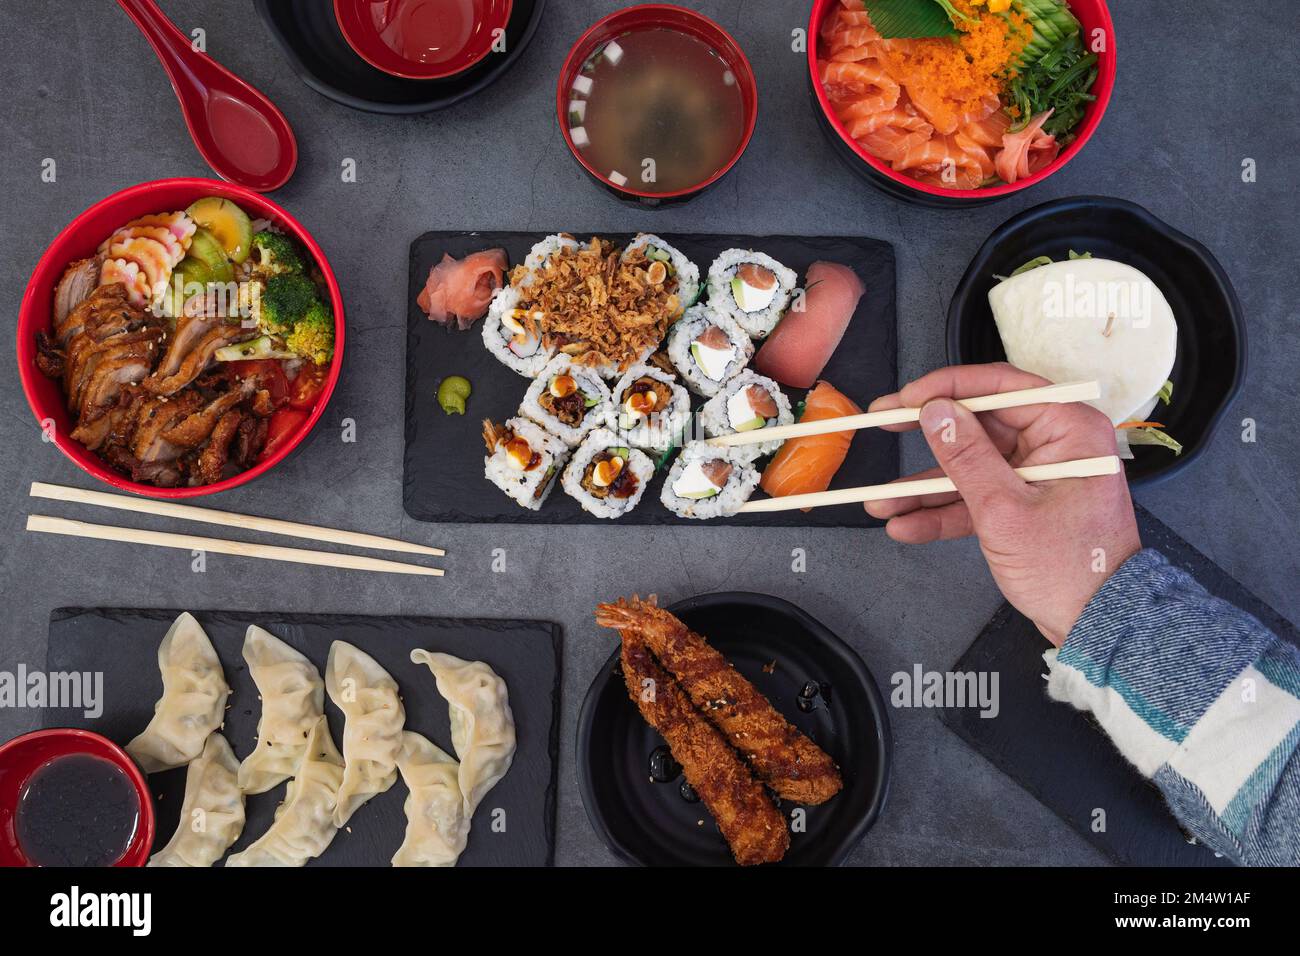 https://c8.alamy.com/comp/2M4W1AF/eating-sushi-rolls-japanese-food-restaurant-assorted-sushi-platter-close-up-of-hand-with-rolling-chopsticks-with-rustic-background-2M4W1AF.jpg